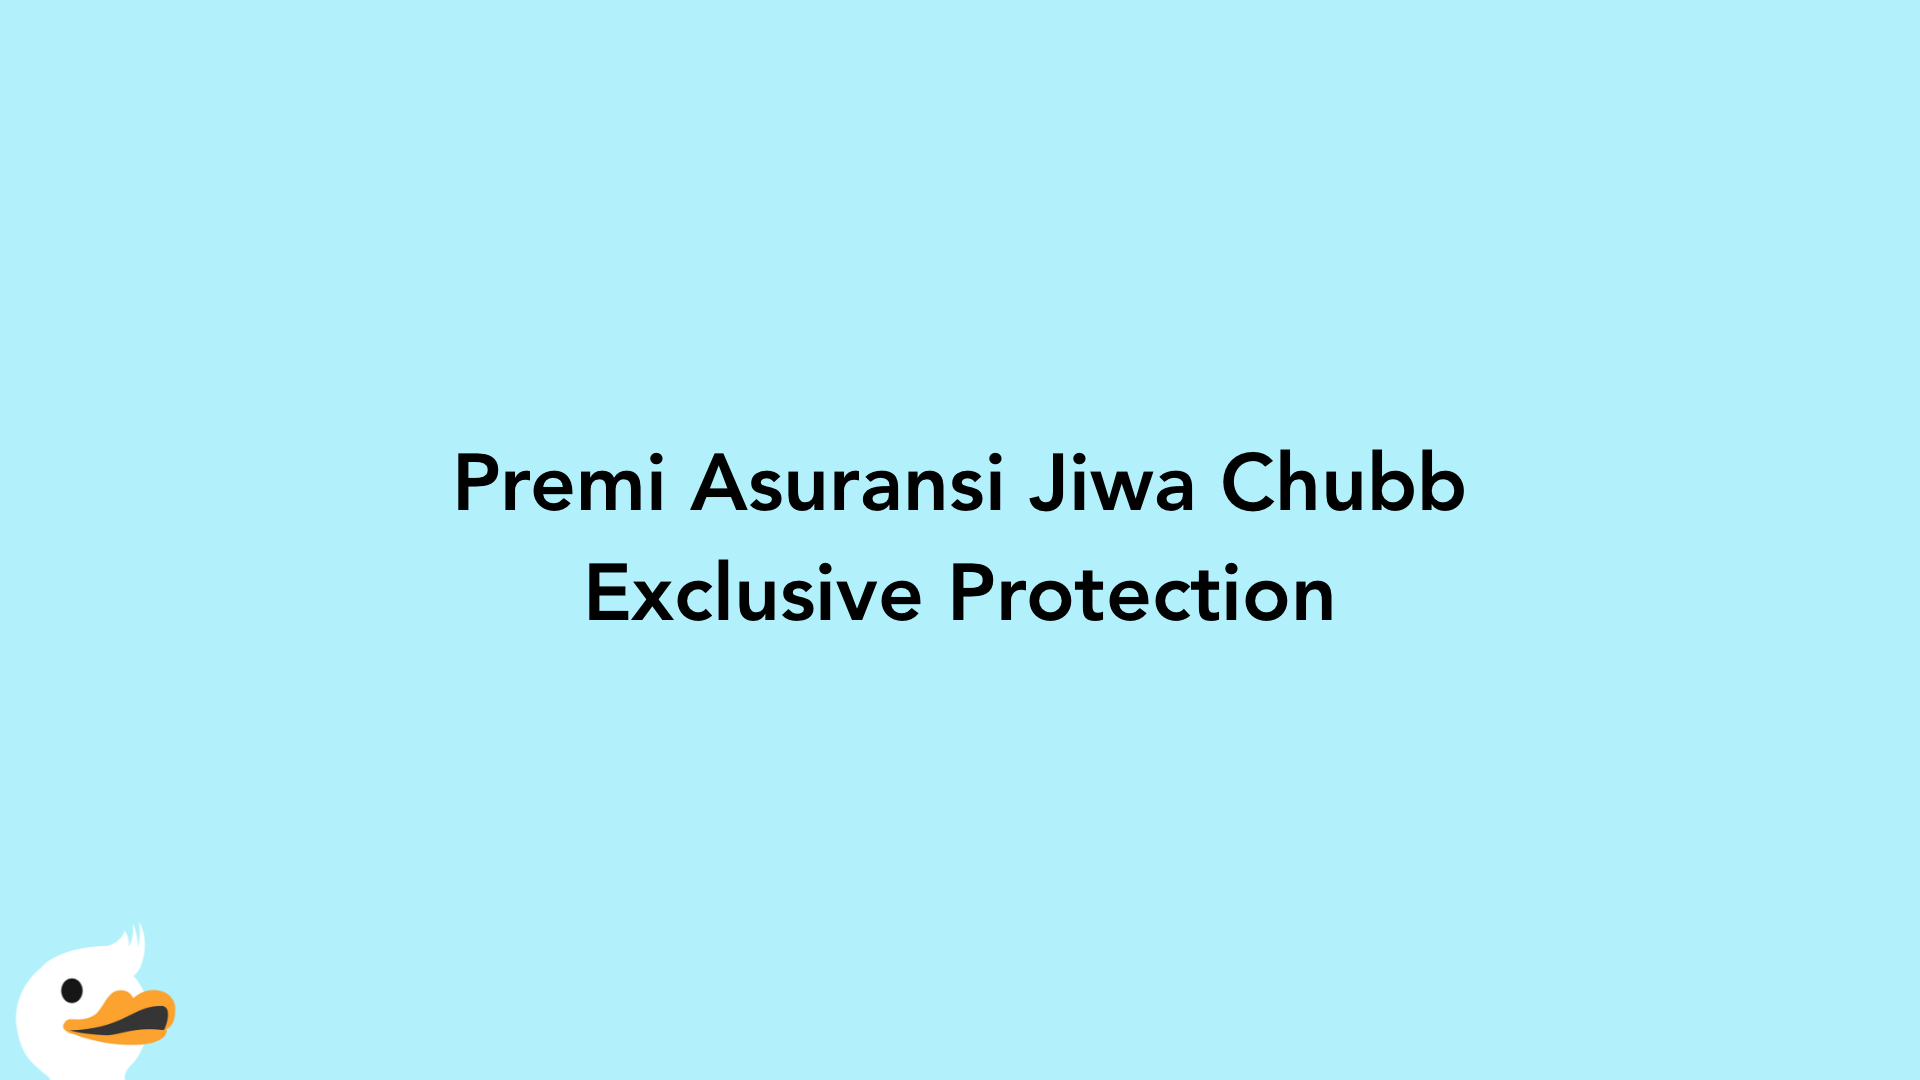 Premi Asuransi Jiwa Chubb Exclusive Protection